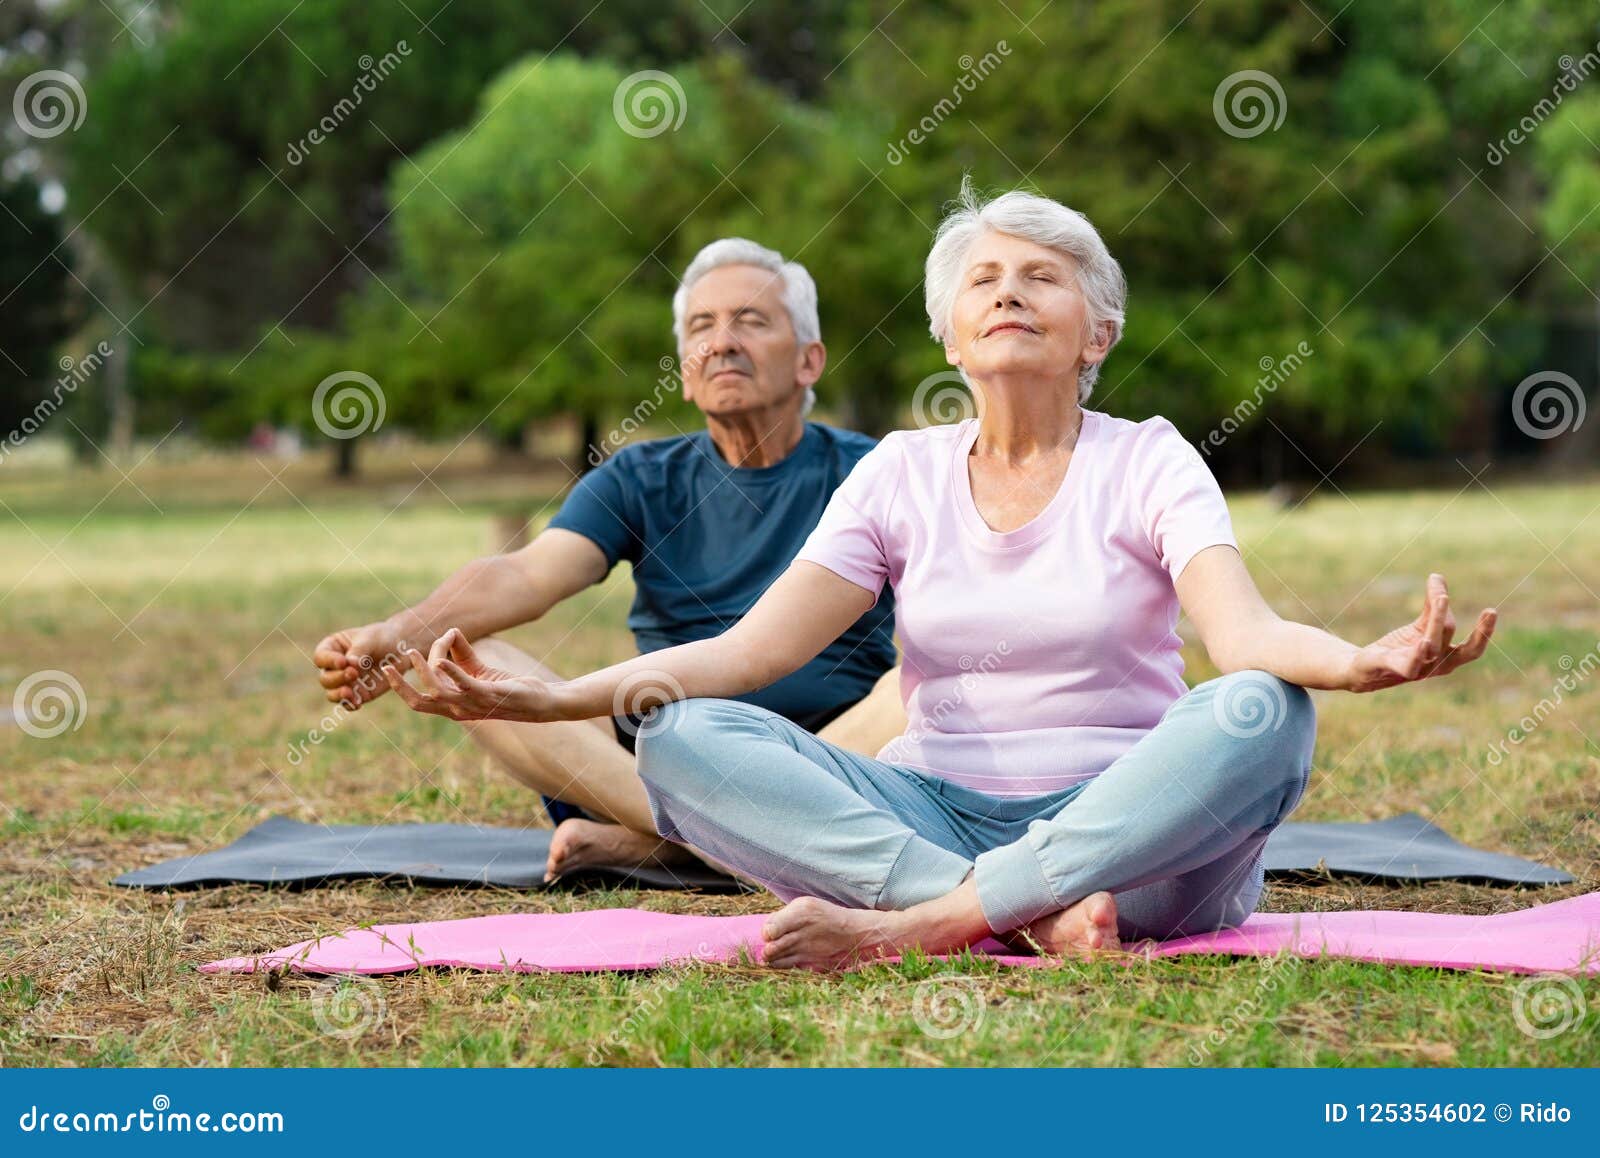 senior couple doing yoga